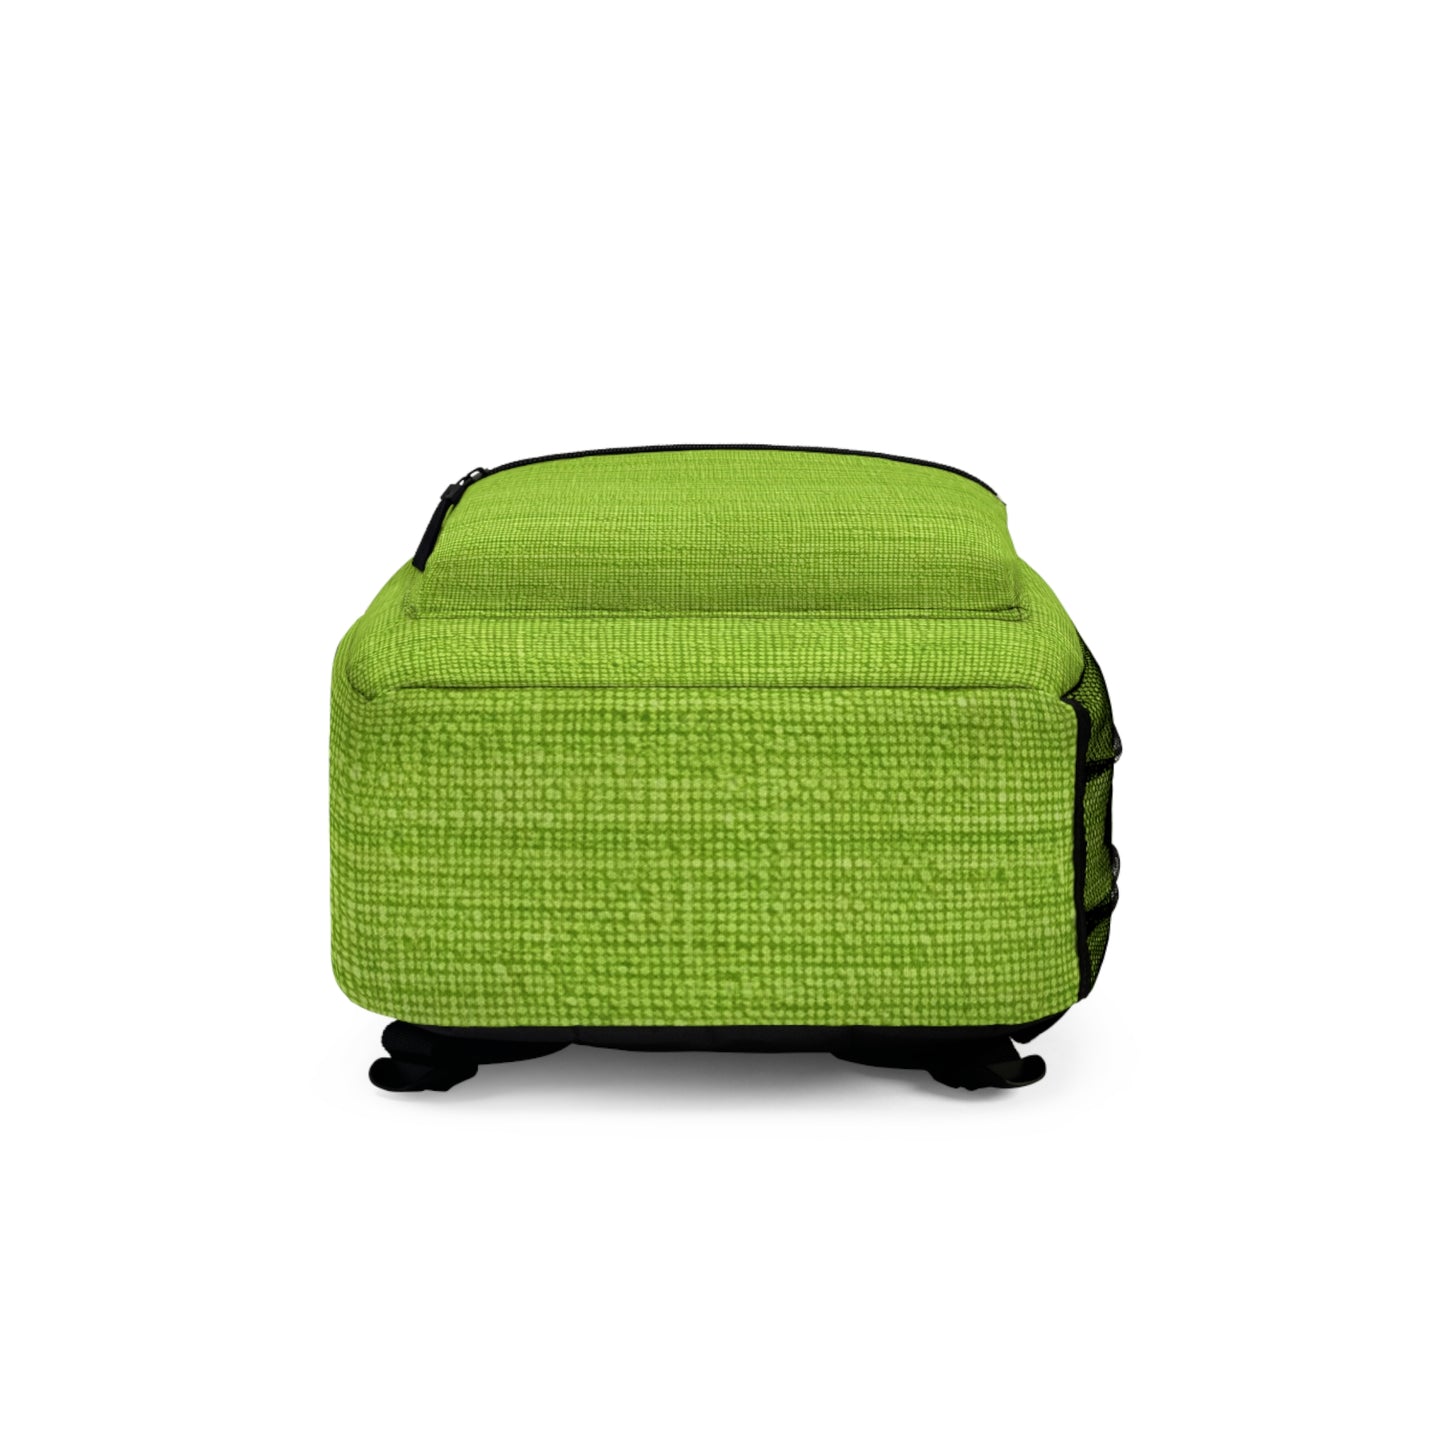 Lush Grass Neon Green: Denim-Inspired, Springtime Fabric Style - Backpack